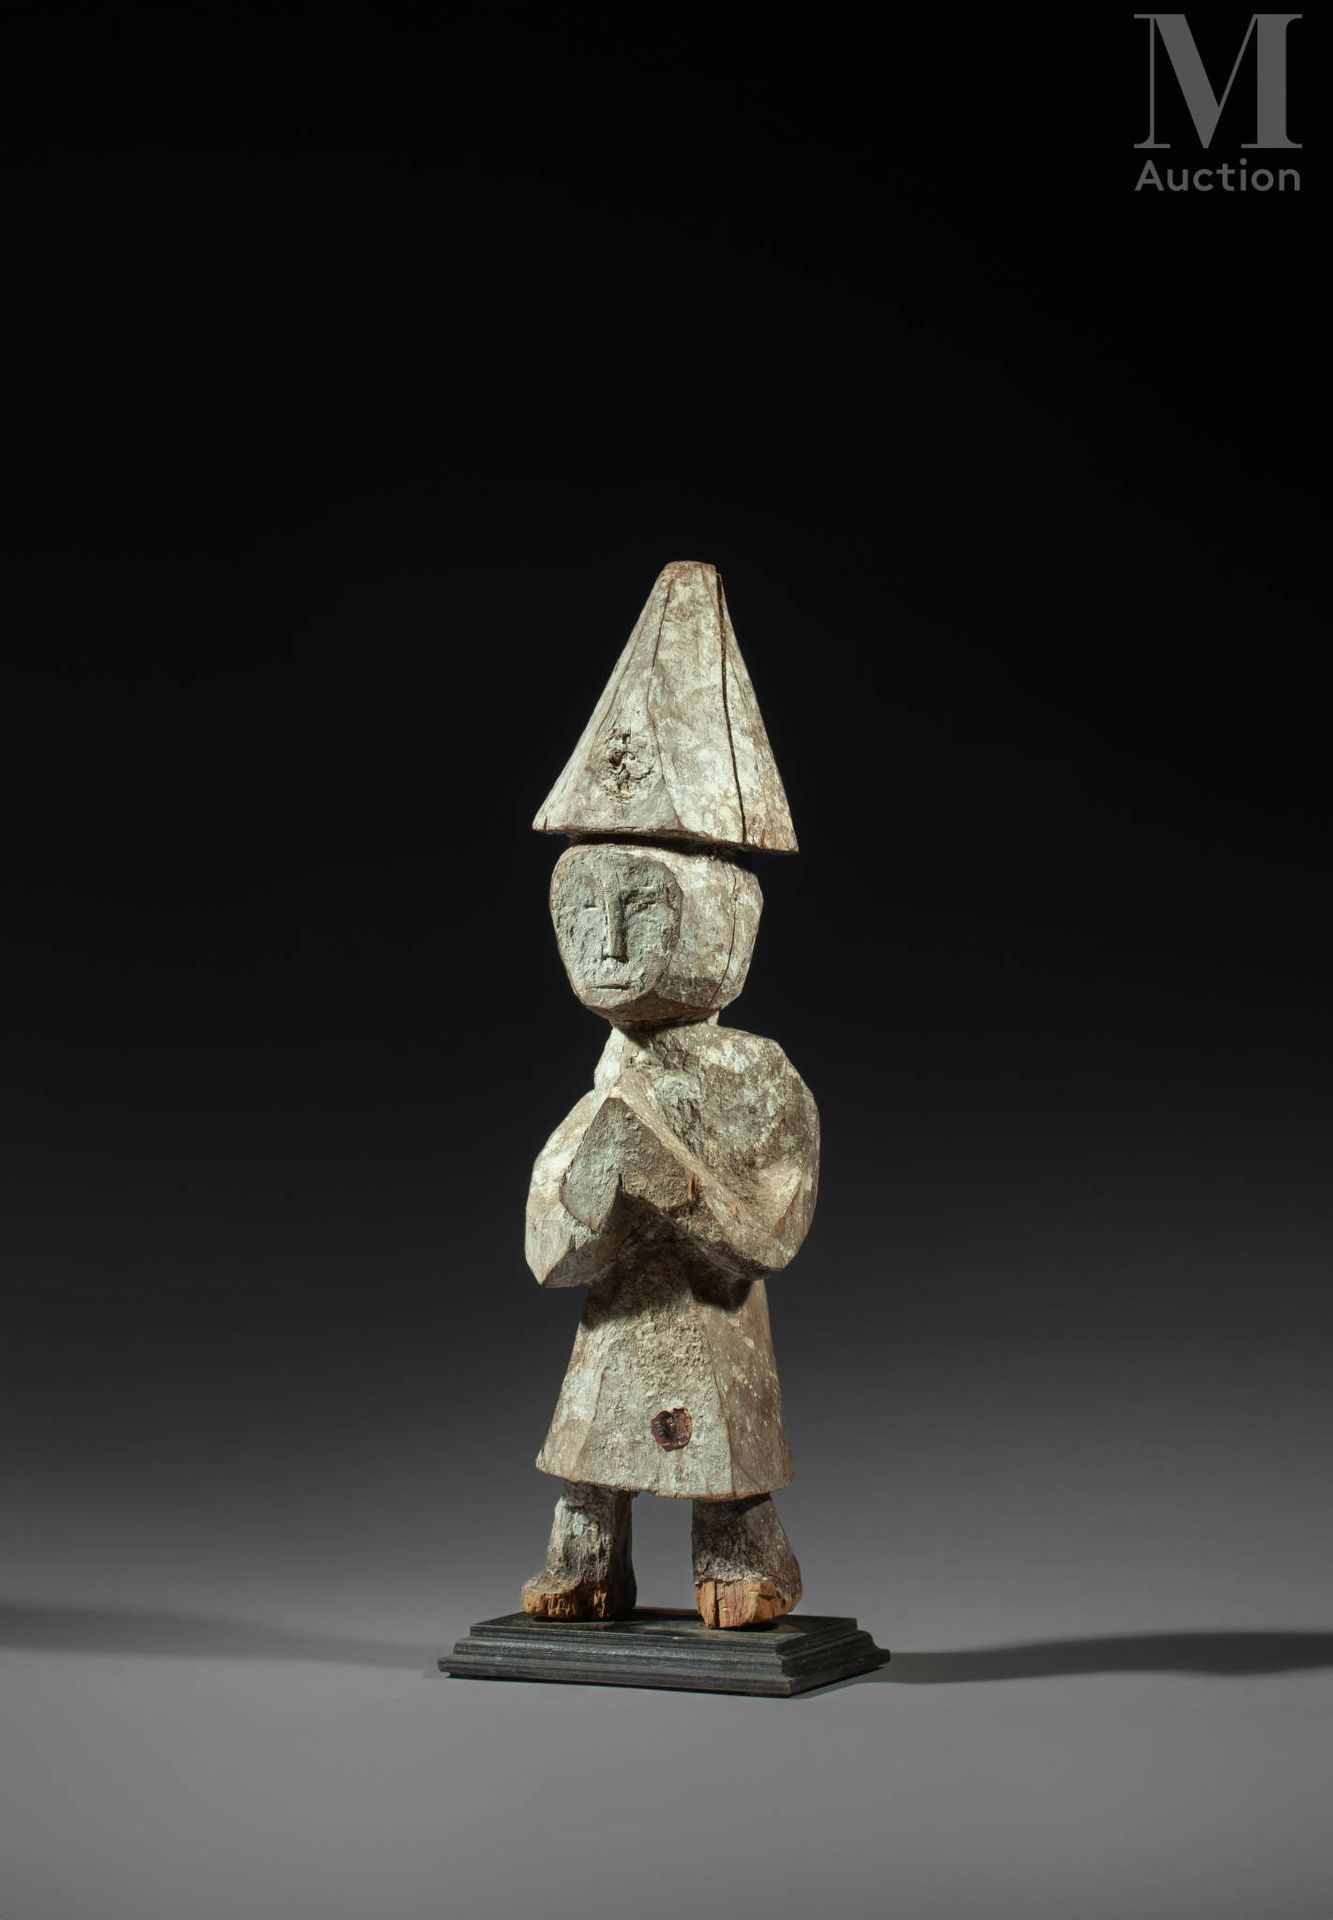 Statuette 展示一个头戴圆锥形大头饰的纳玛斯特人像 
木质，古铜绿和白色粘土痕迹
尼泊尔
40.5 厘米

出处：让-吕克-科尔特斯收藏